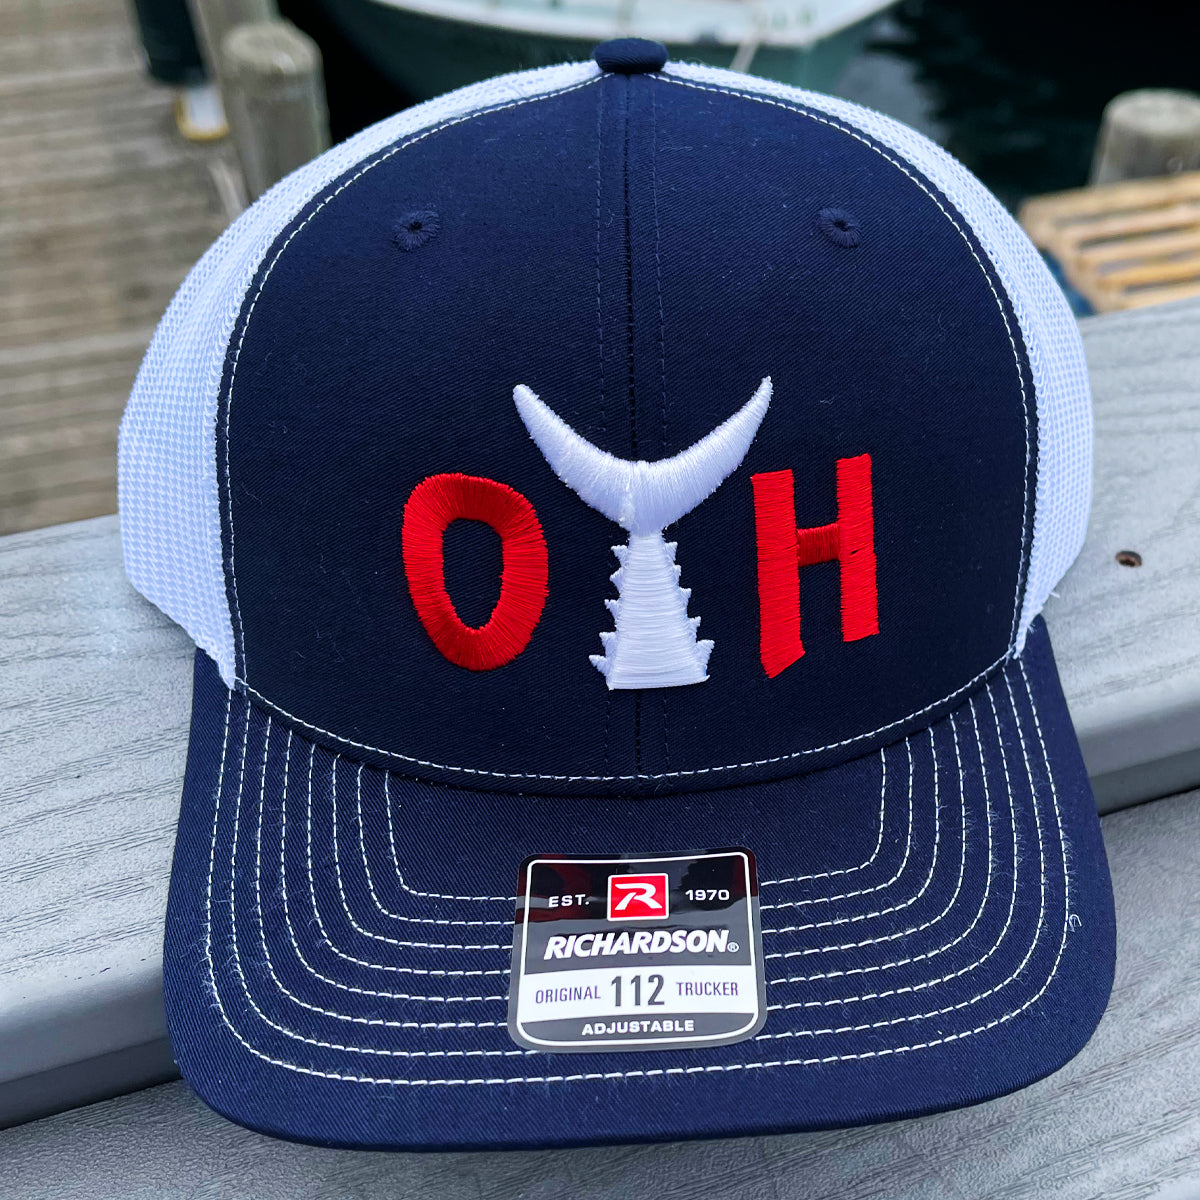 O.T.H. Adjustable Trucker Hat - Navy, White & Red